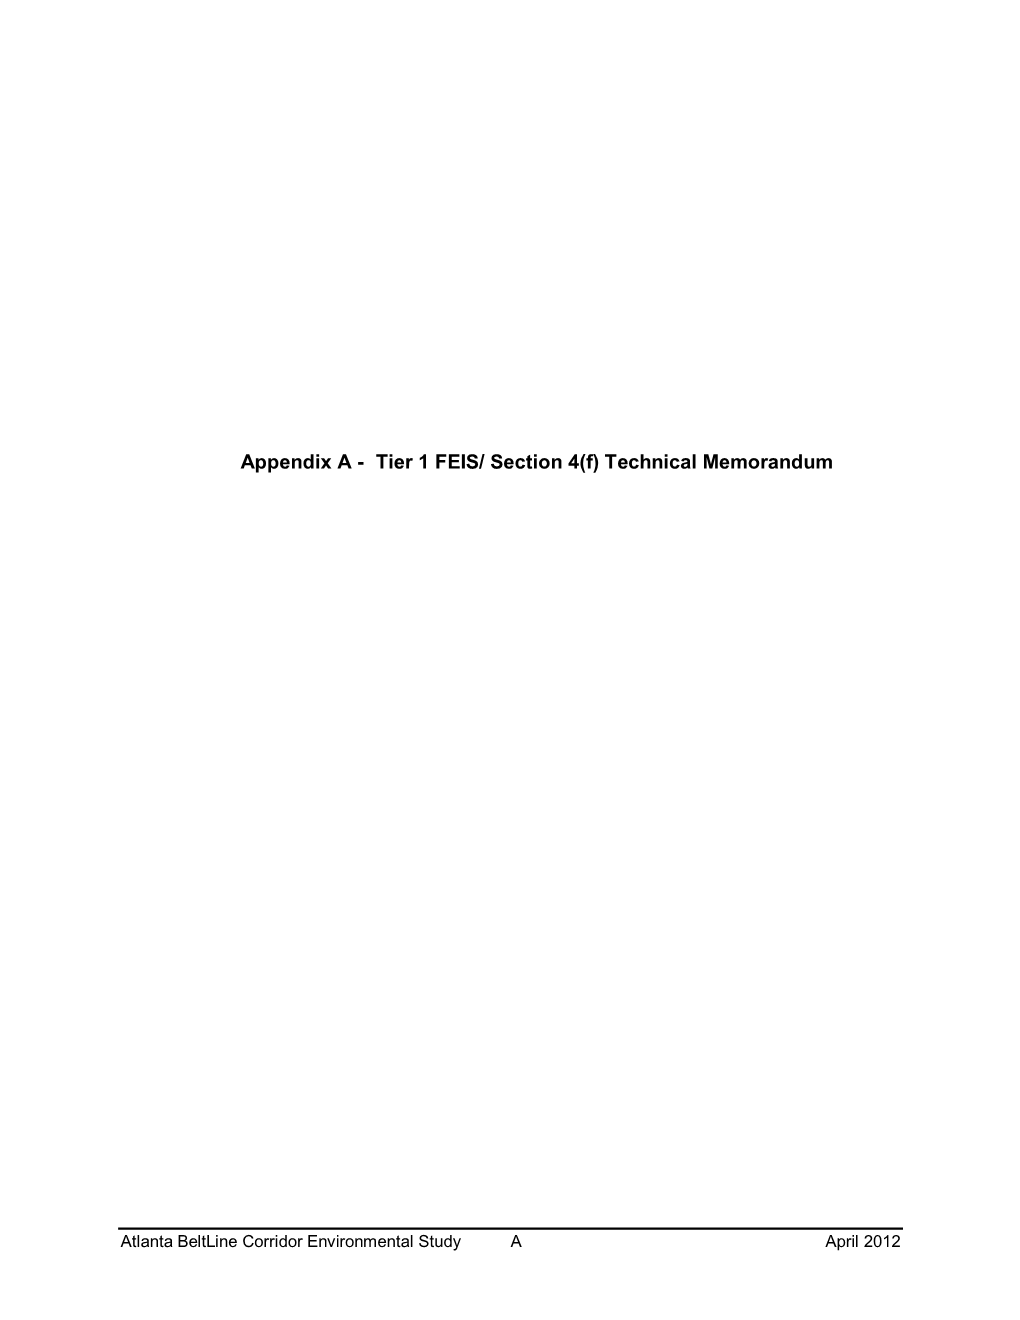 Appendix a - Tier 1 FEIS/ Section 4(F) Technical Memorandum